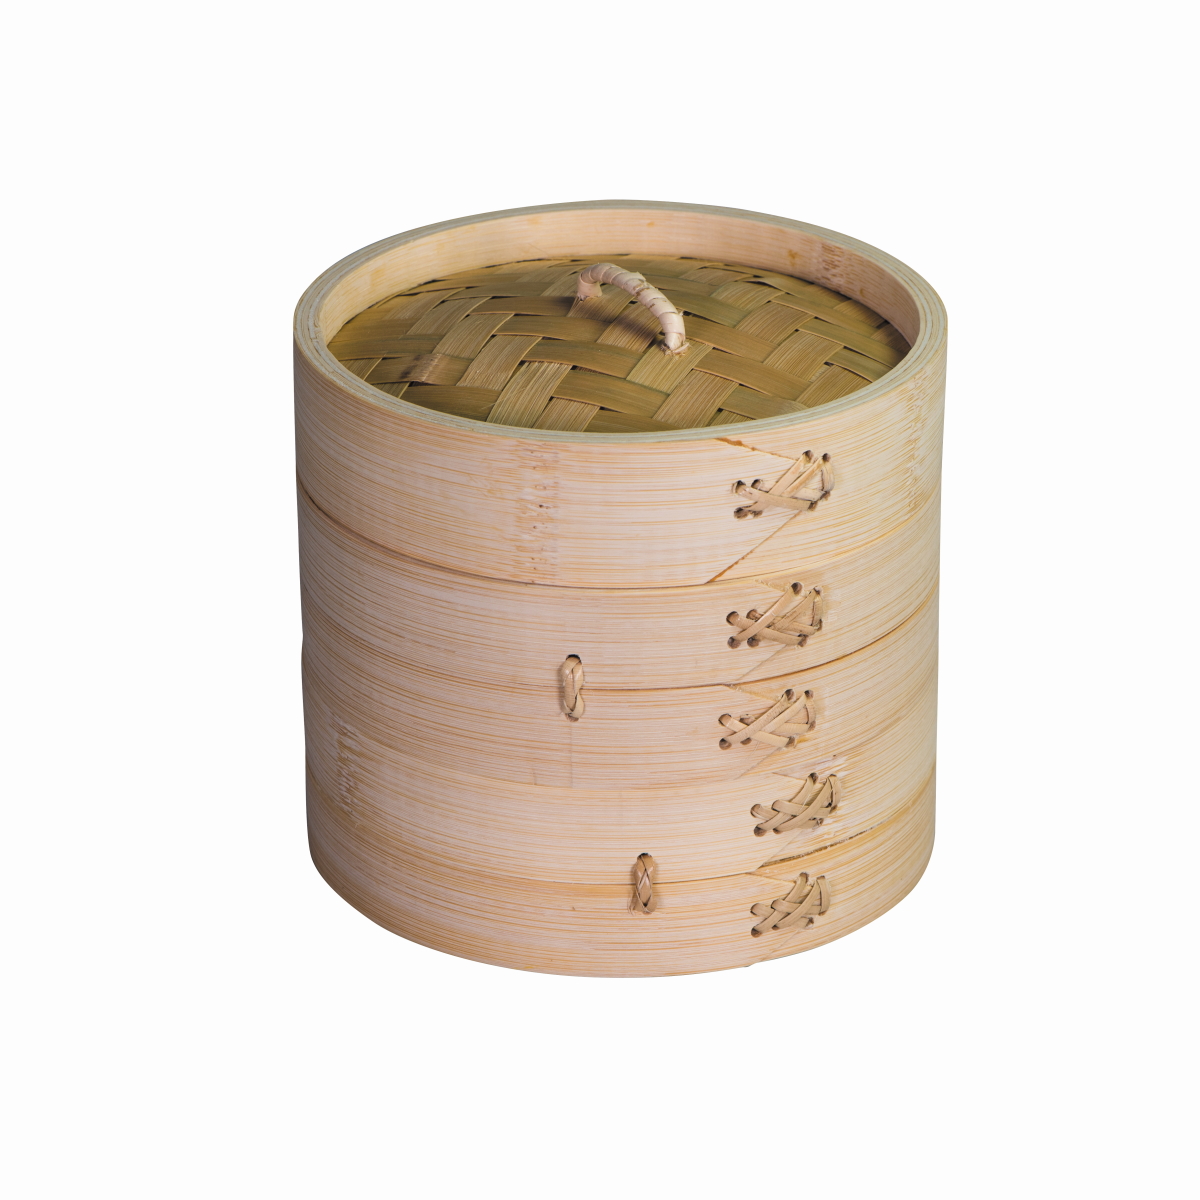 Avanti Bamboo Steamer Basket-15cm